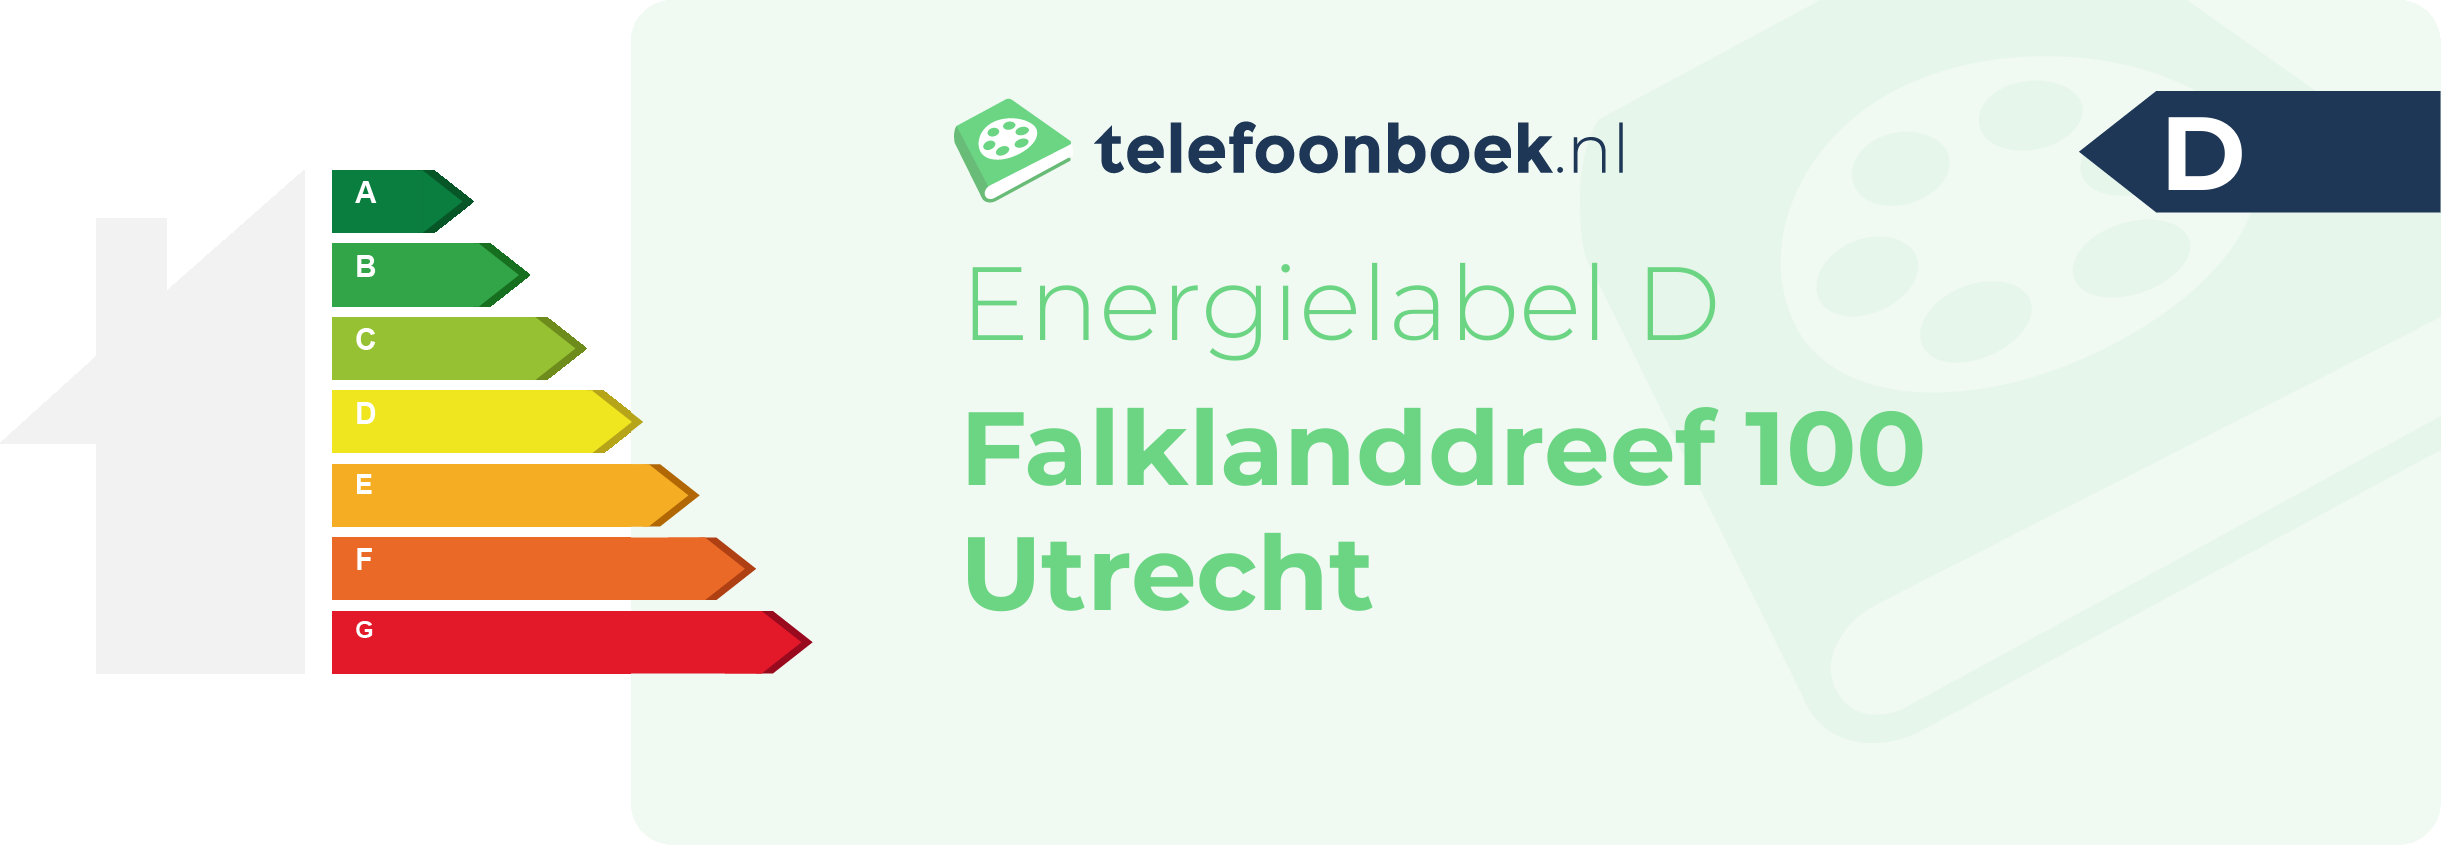 Energielabel Falklanddreef 100 Utrecht